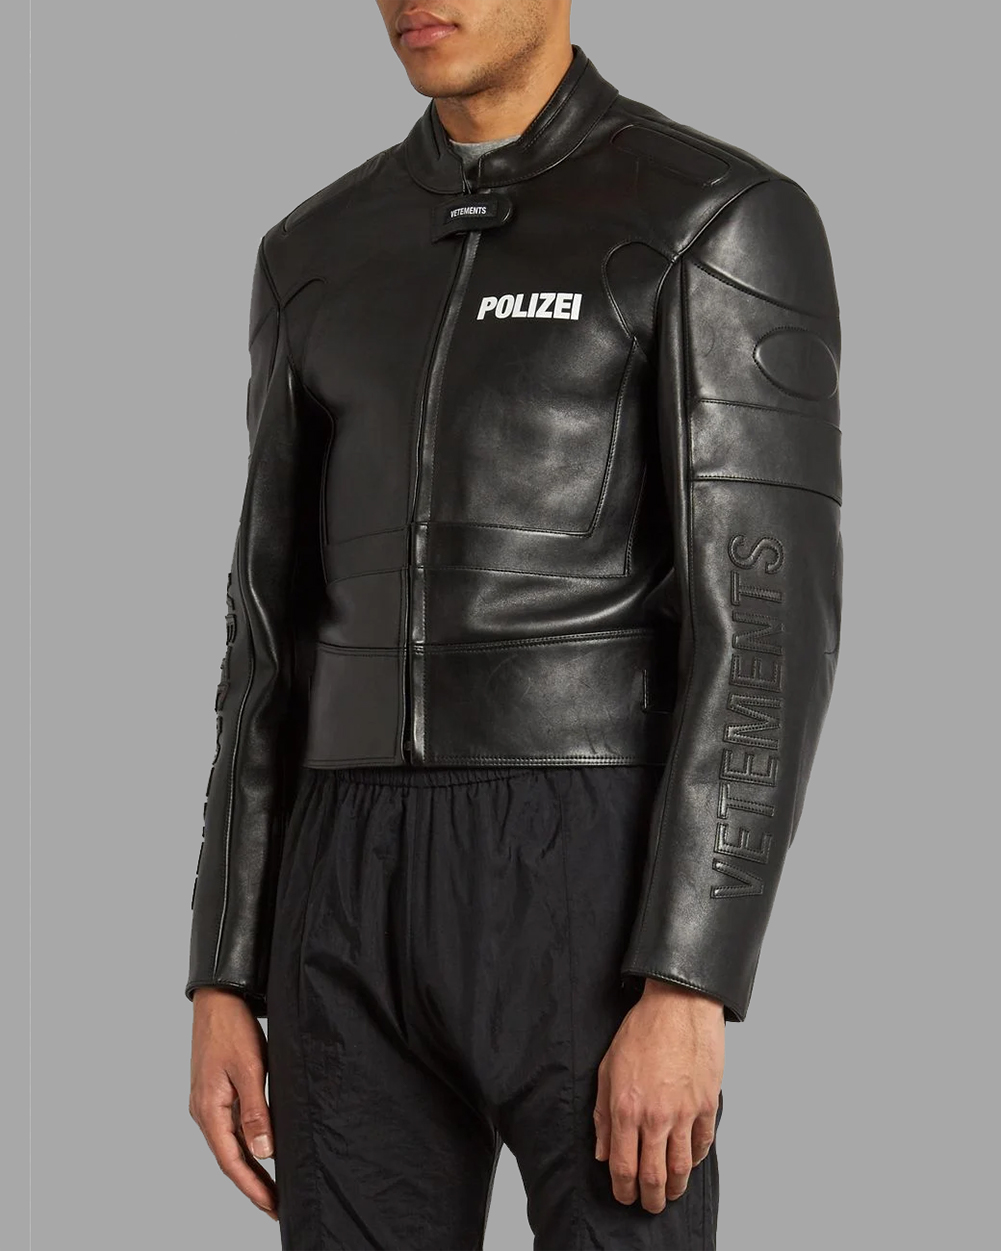 VETEMENTS Polizei Leather Racing Jacket - Black - A2 Jackets